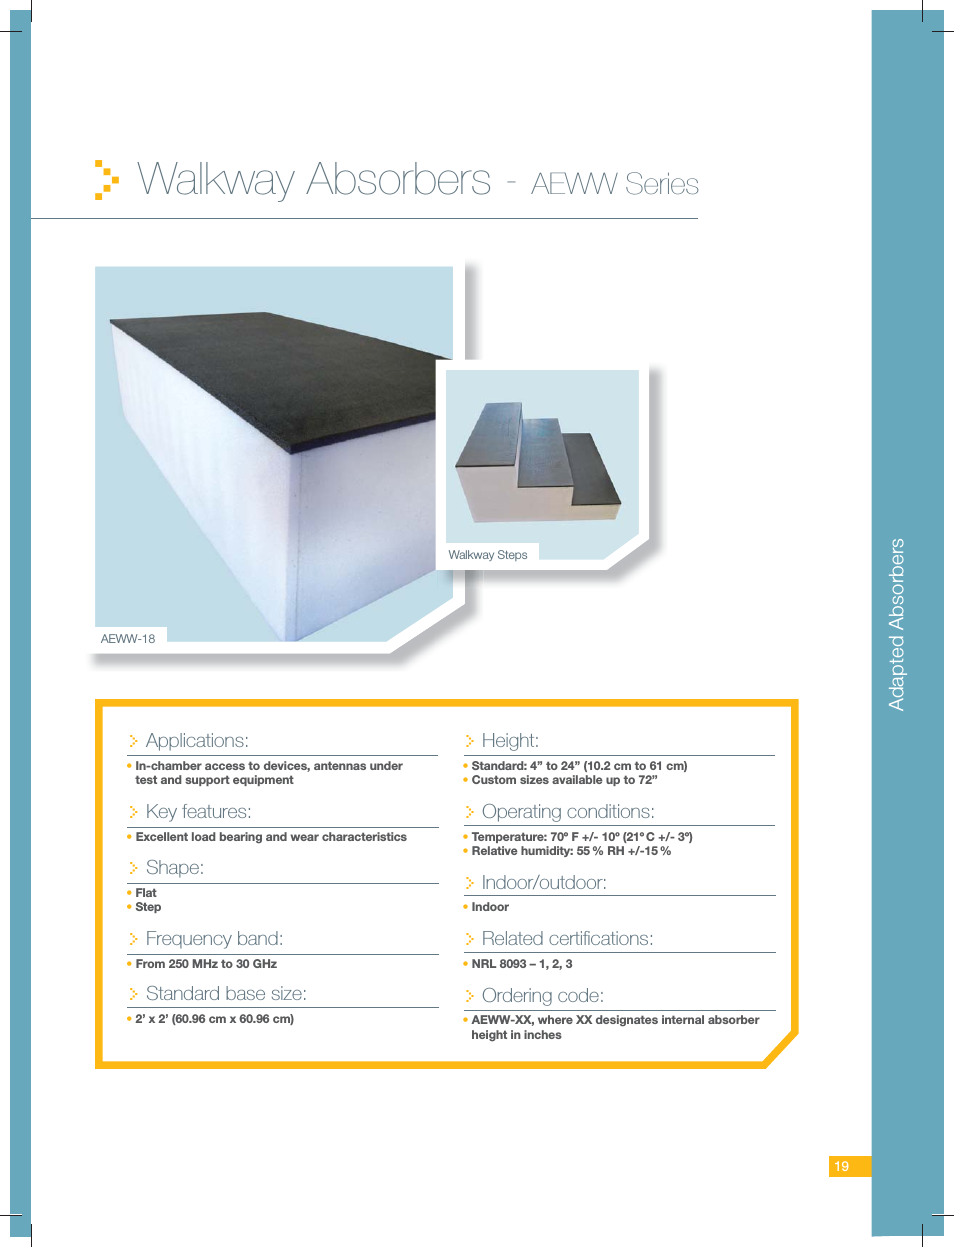 Walkway Absorbers - AEWW Series